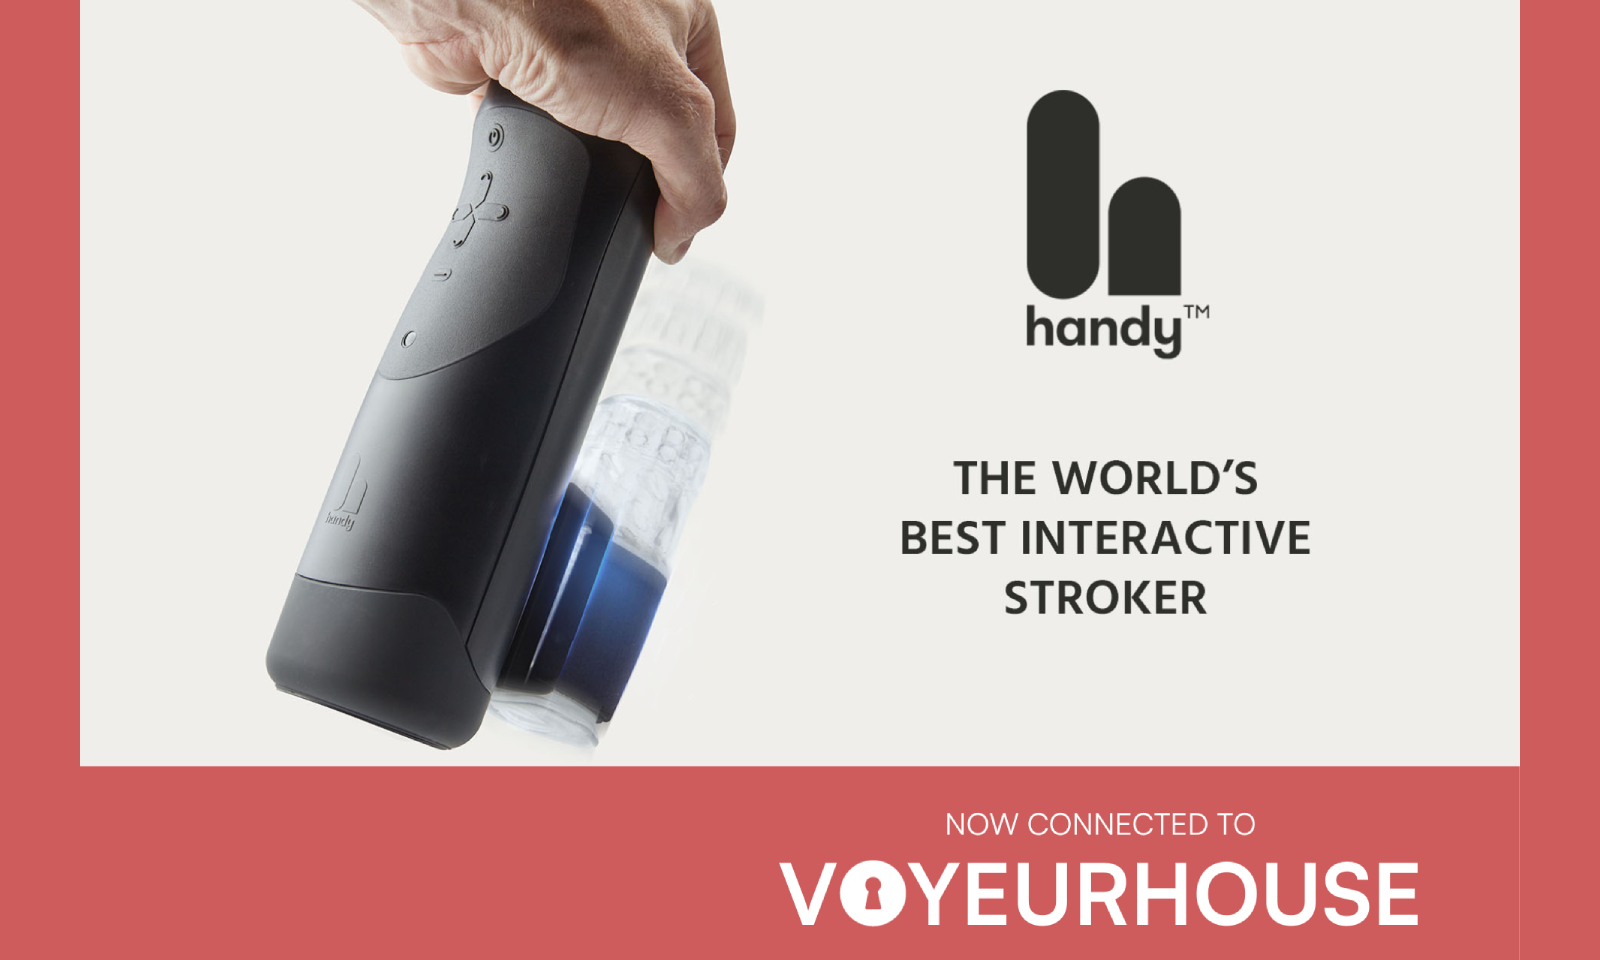 The Handy, VoyeurHouse.com Join to Create New Experience